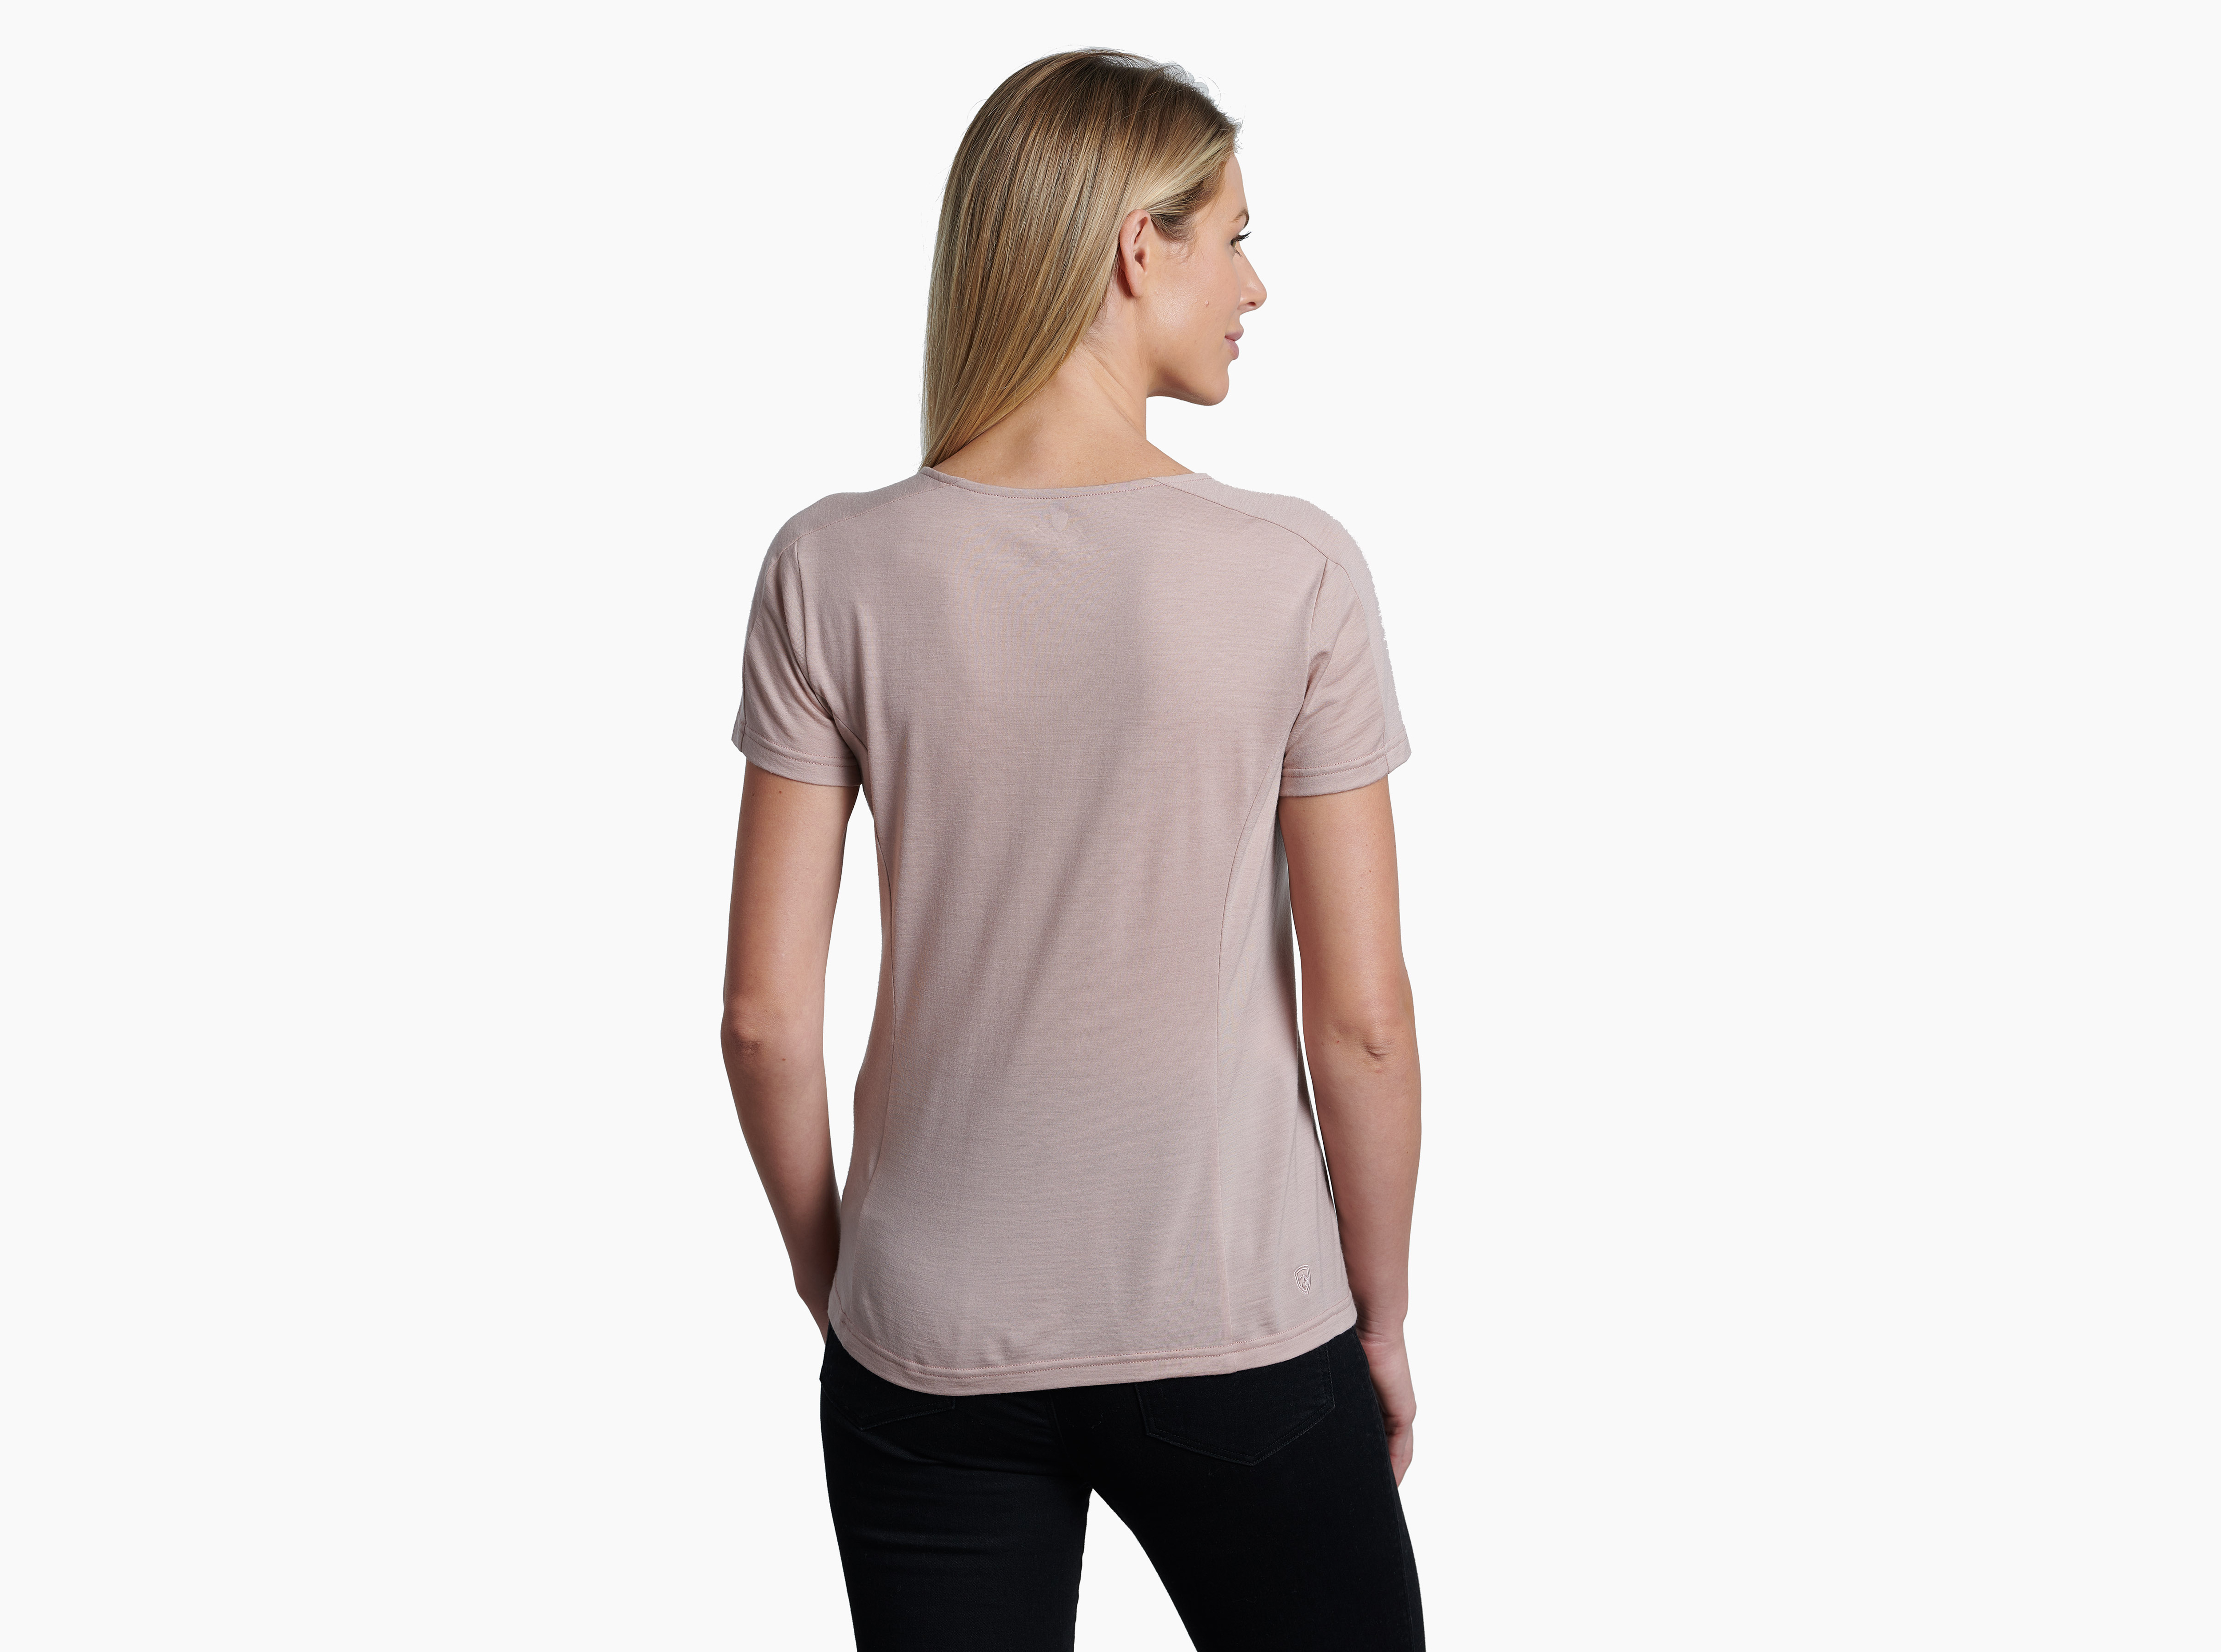 Kuhl Konstance Long Sleeve Womens Shirt - Rose Ash